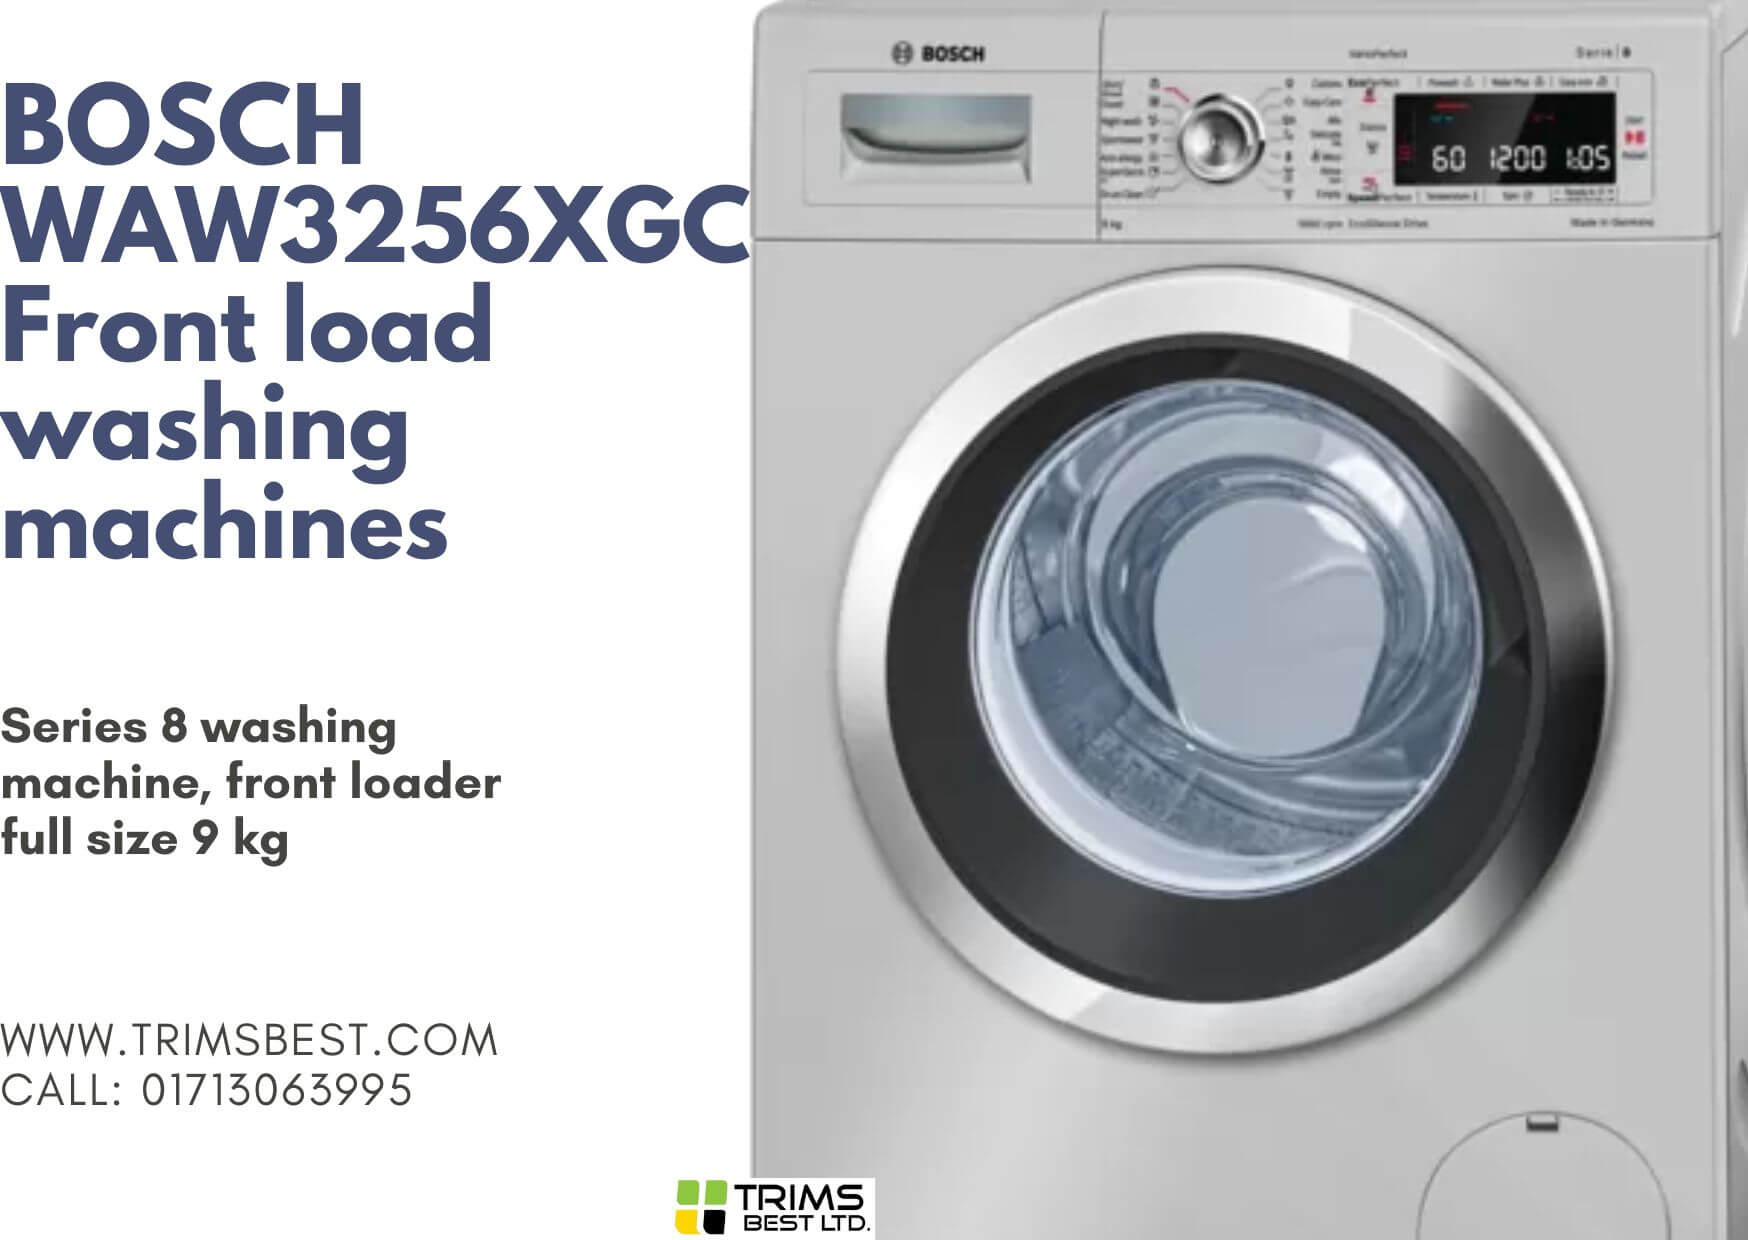 BOSCH WAW3256XGC Front load washing machines in Bangladesh